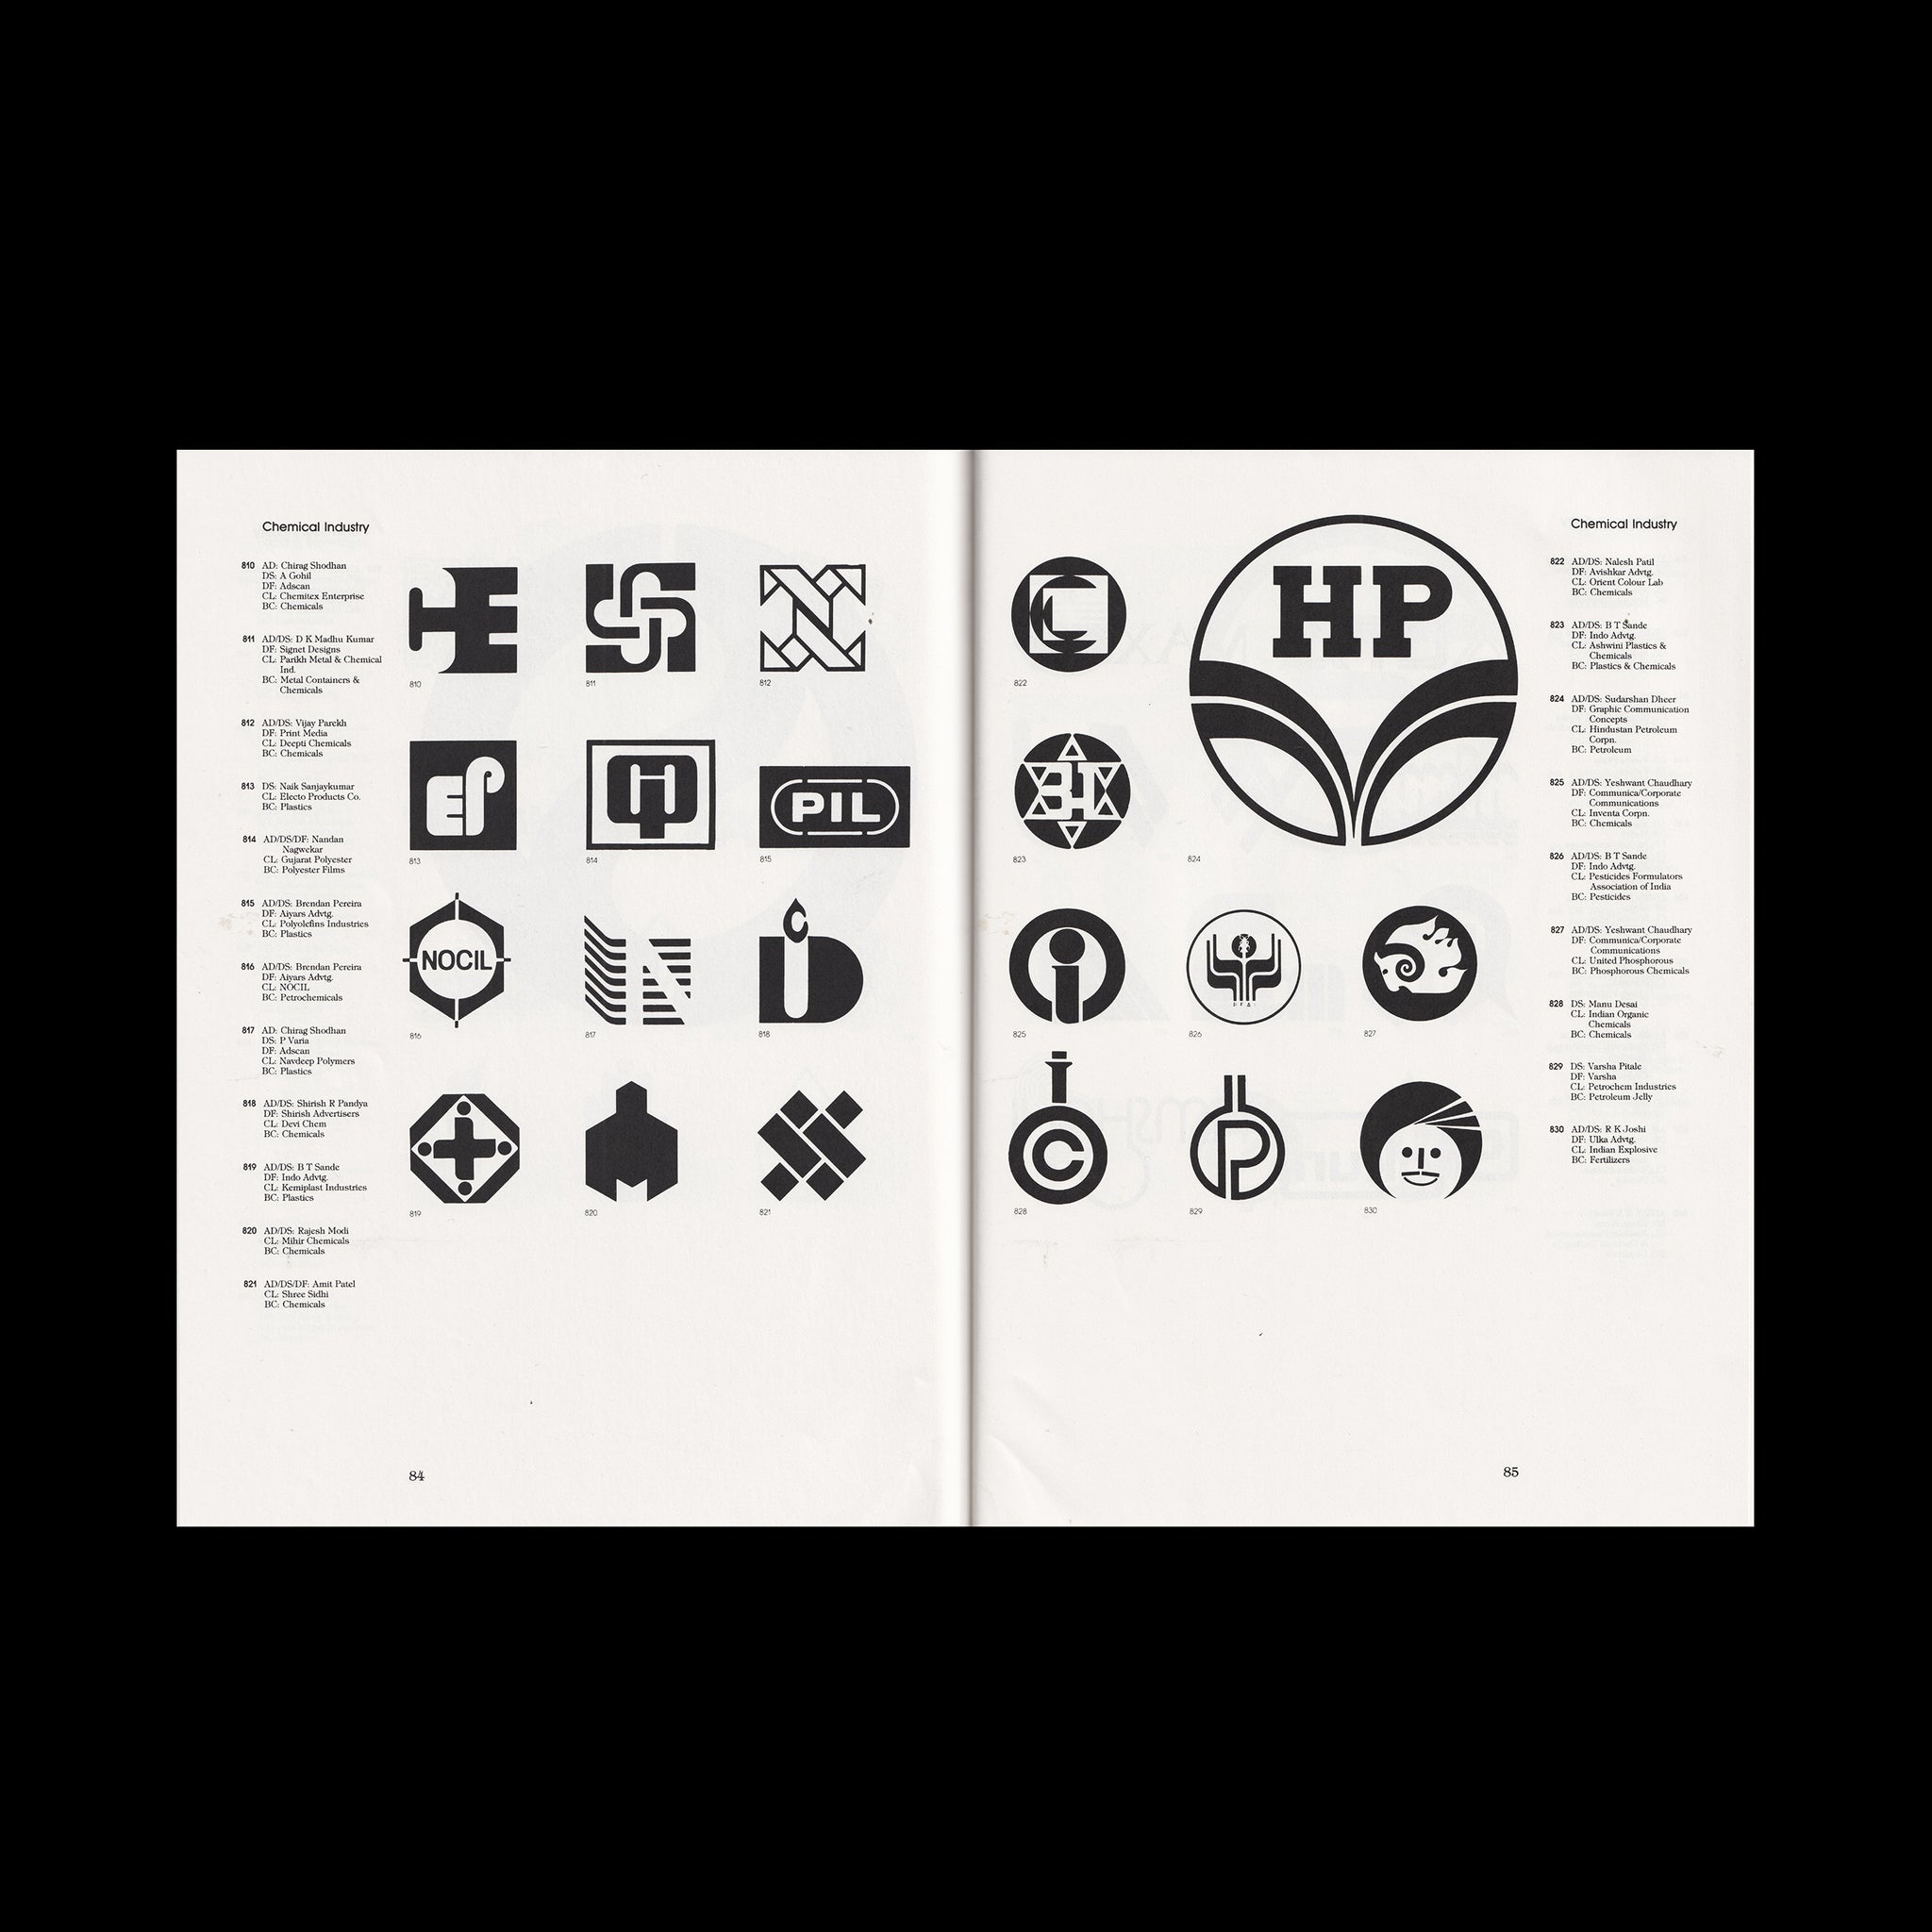 Symbols, Logos and Trademarks, 1991